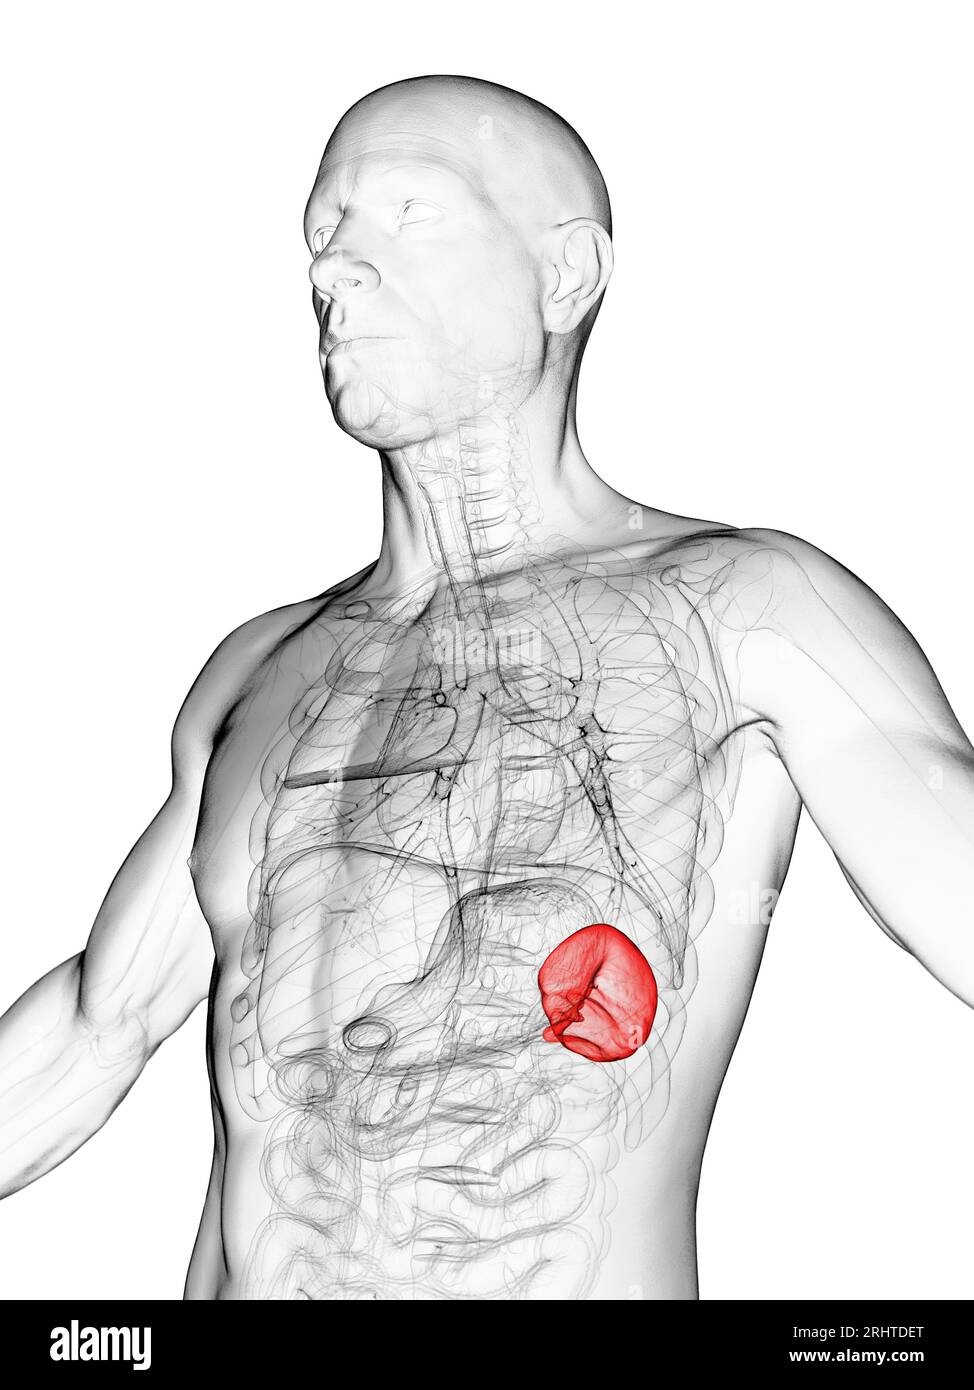 Male spleen, illustration Stock Photo - Alamy